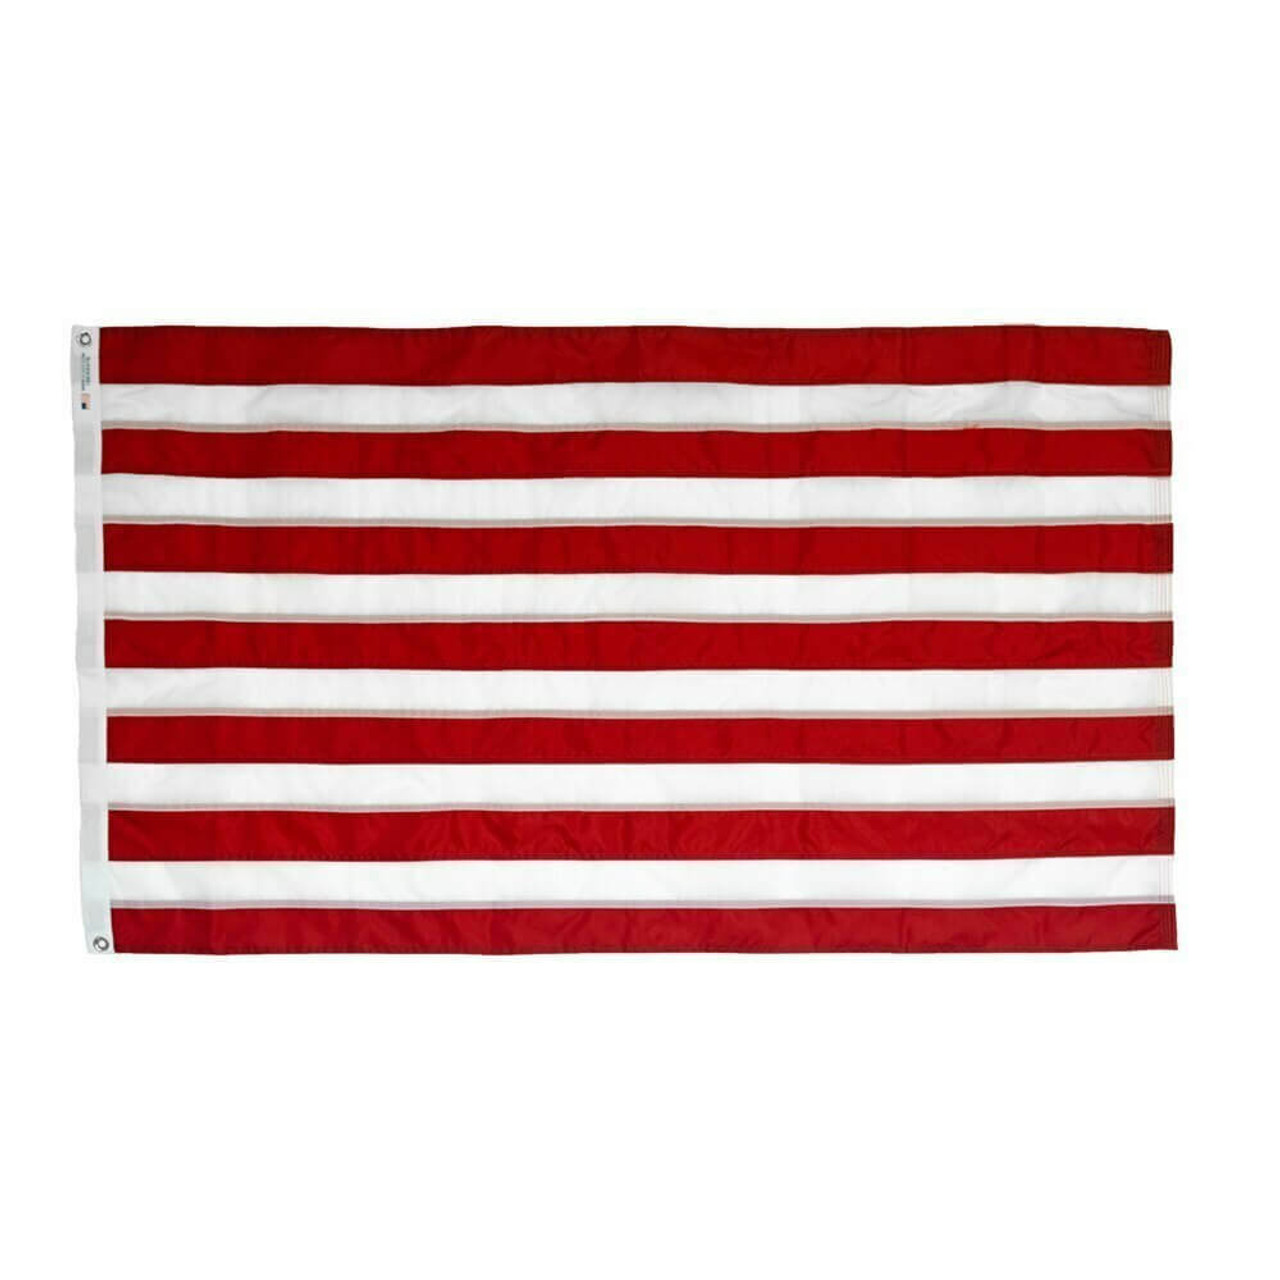 of Liberty Flag - American Revolution - Flags.com